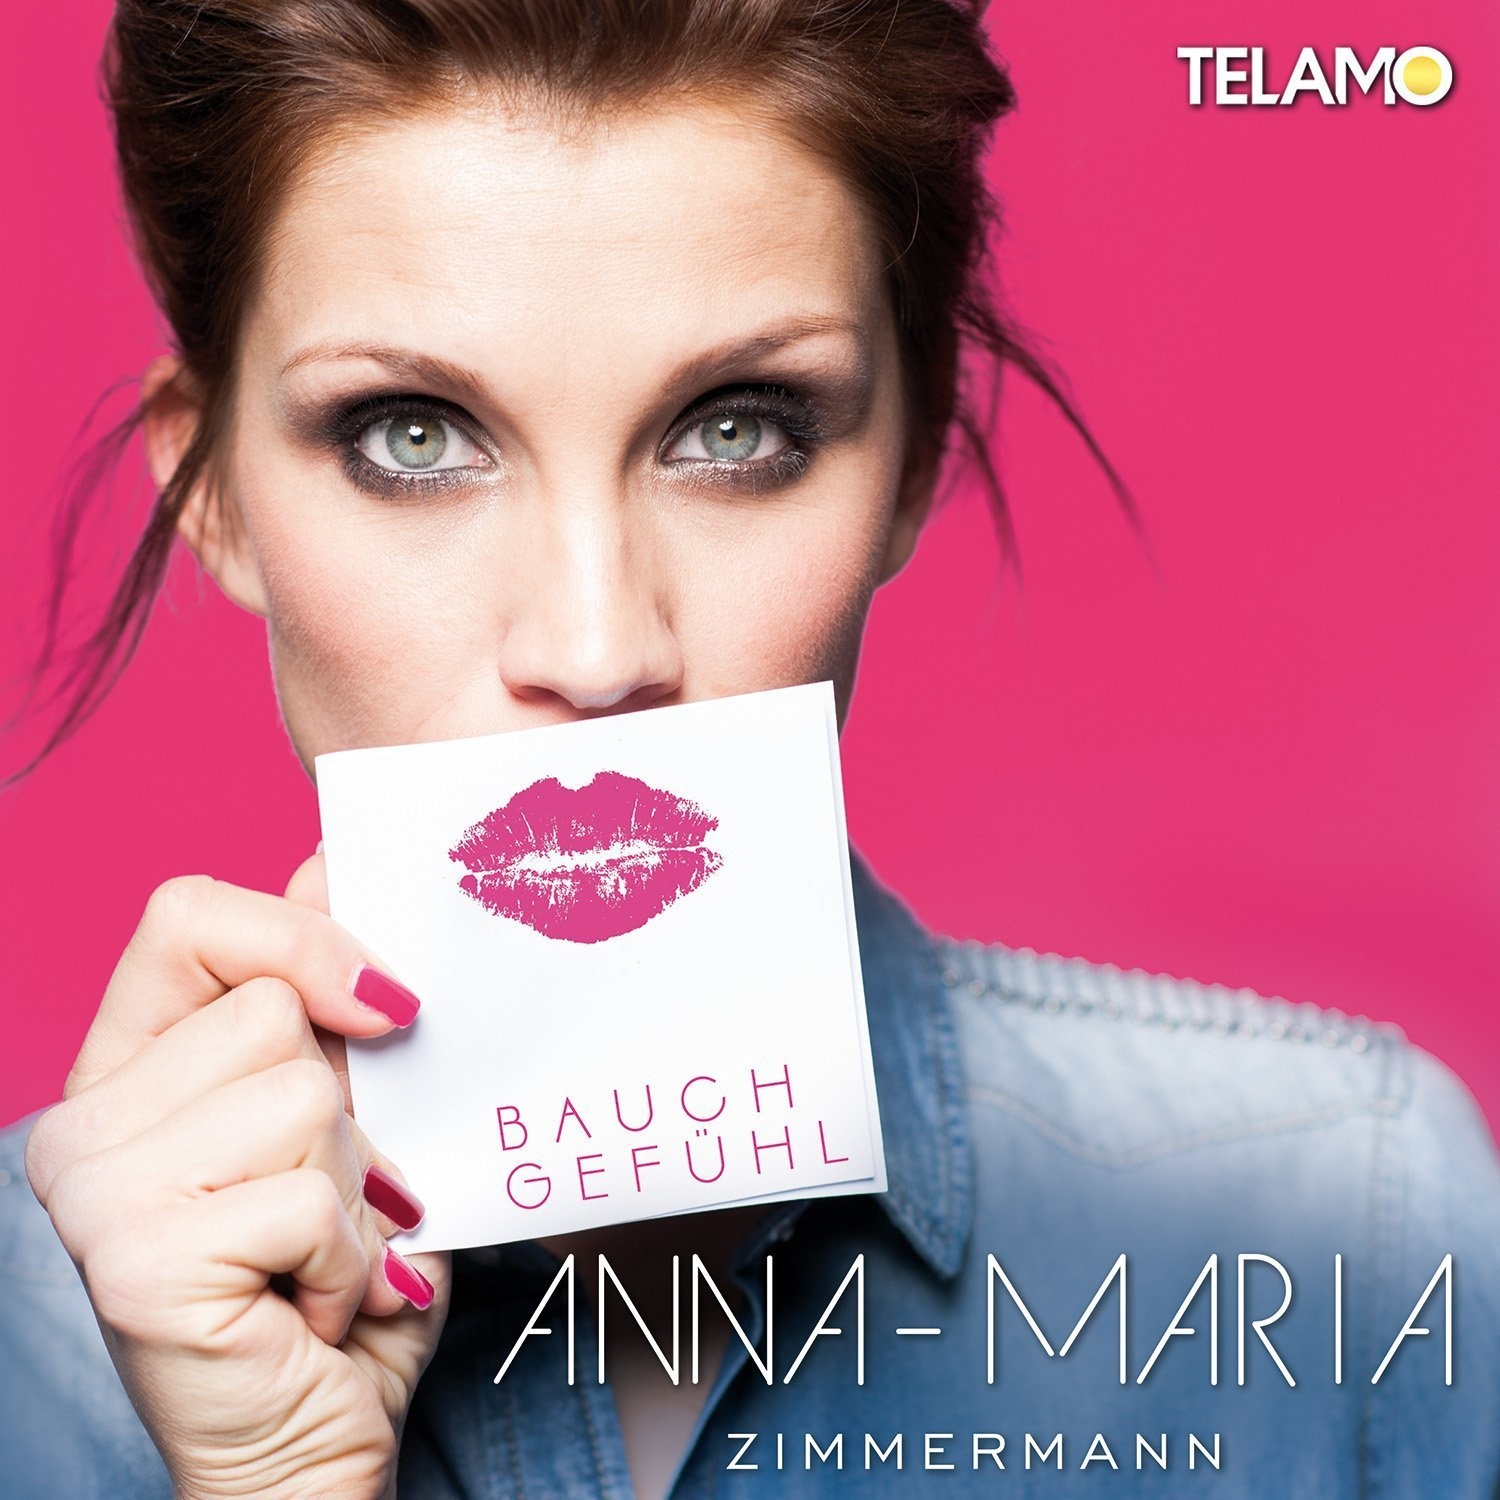 Bauchgefühl - Anna-Maria Zimmermann. (CD)